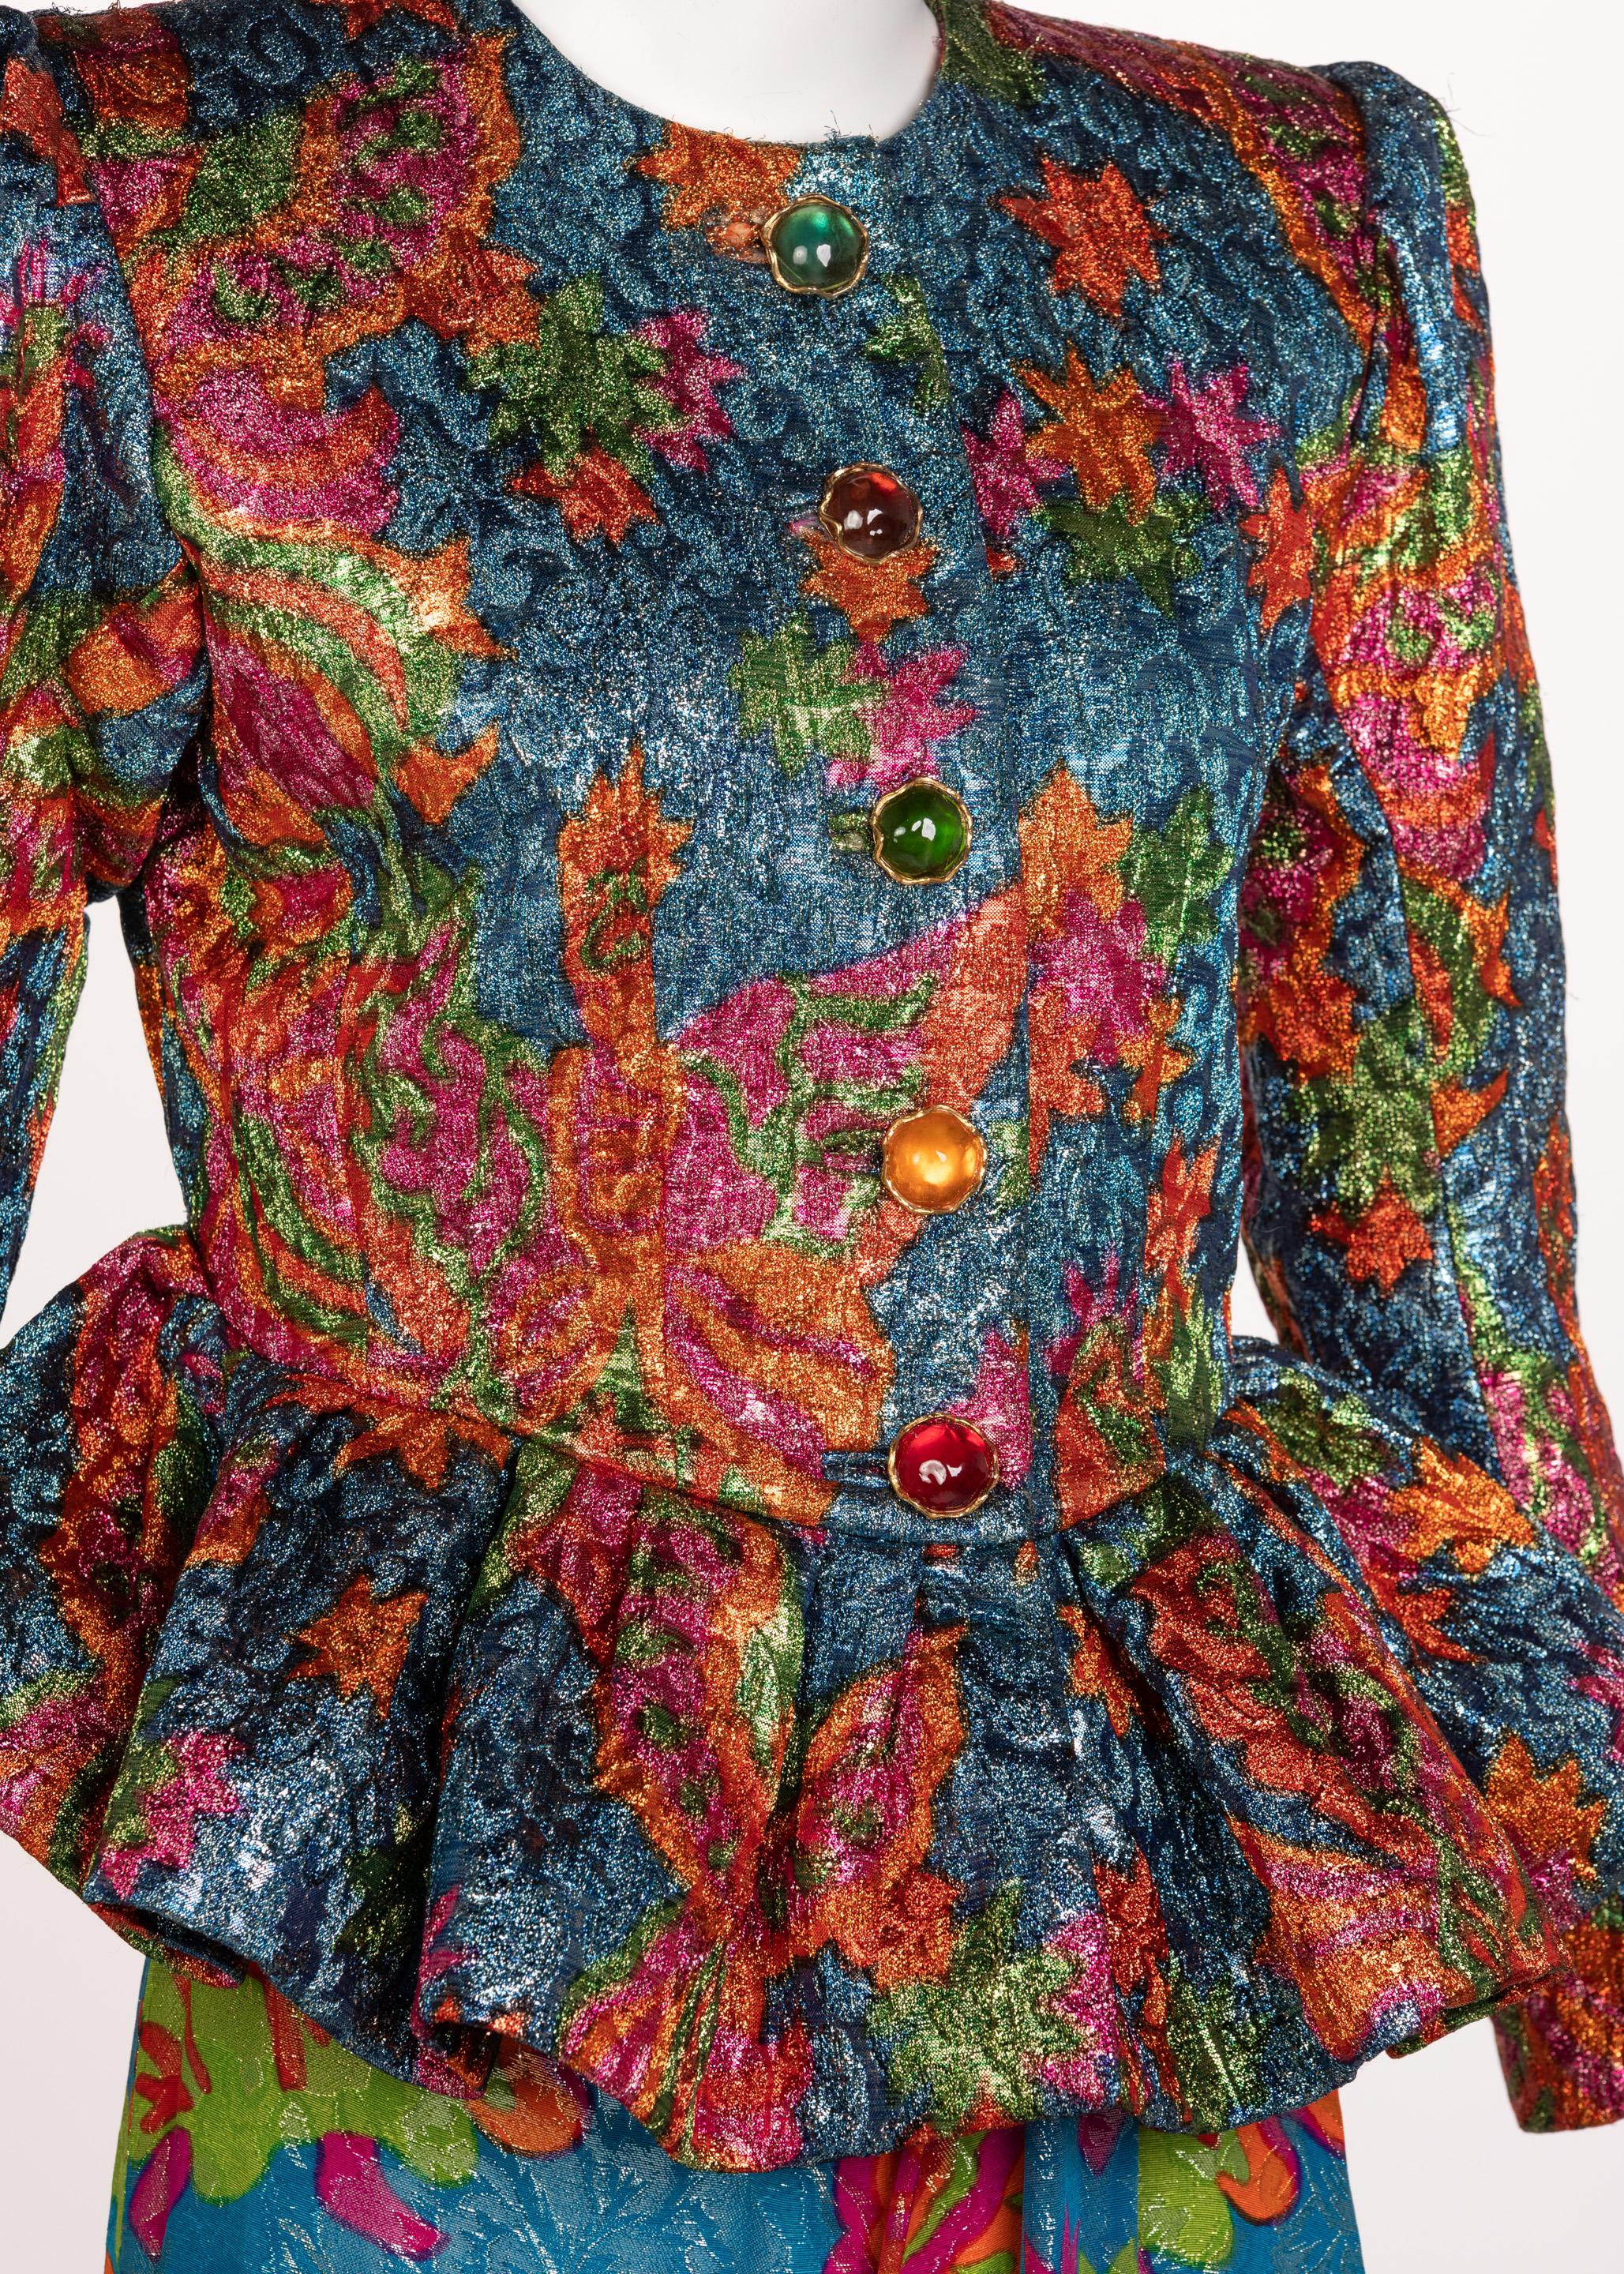 Yves Saint Laurent Silk Brocade Jacket Butterfly Skirt Ensemble Runway YSL, 1989 For Sale 4